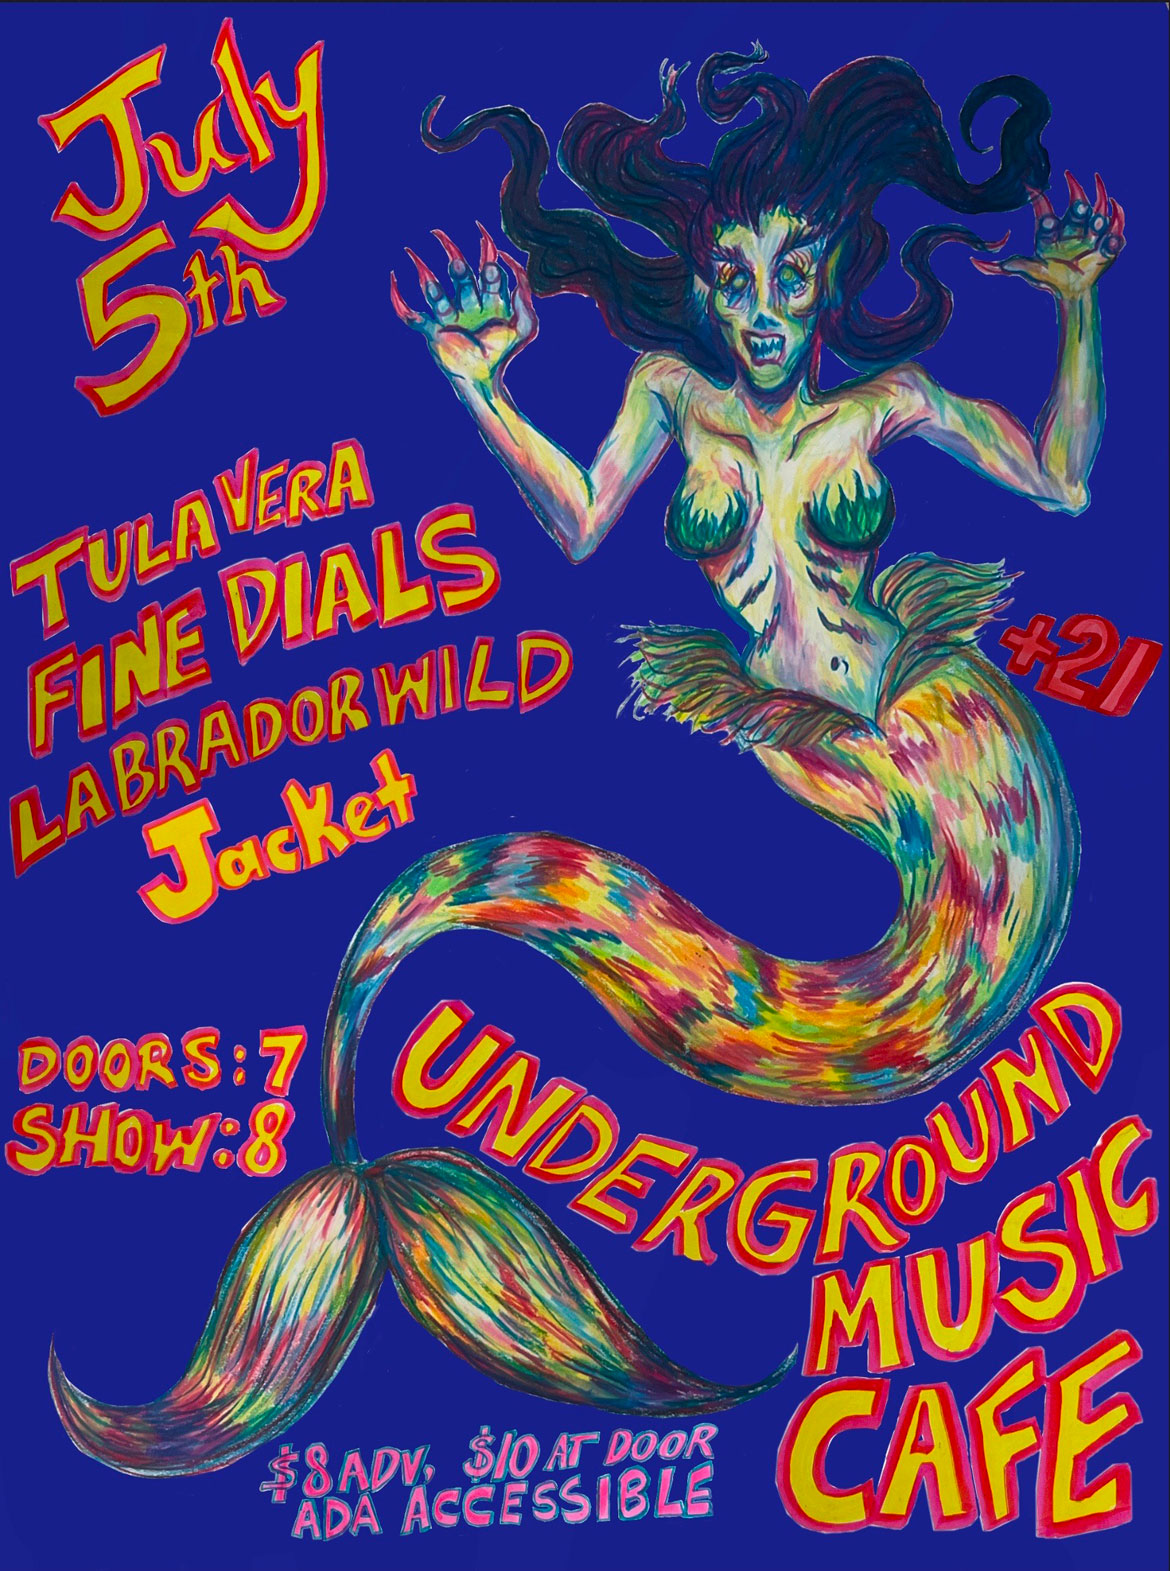 Tula Vera, Fine Dials, Labrador Wild, & Jacket at Underground Music Cafe in Minneapolis, MN on 7/5/2023